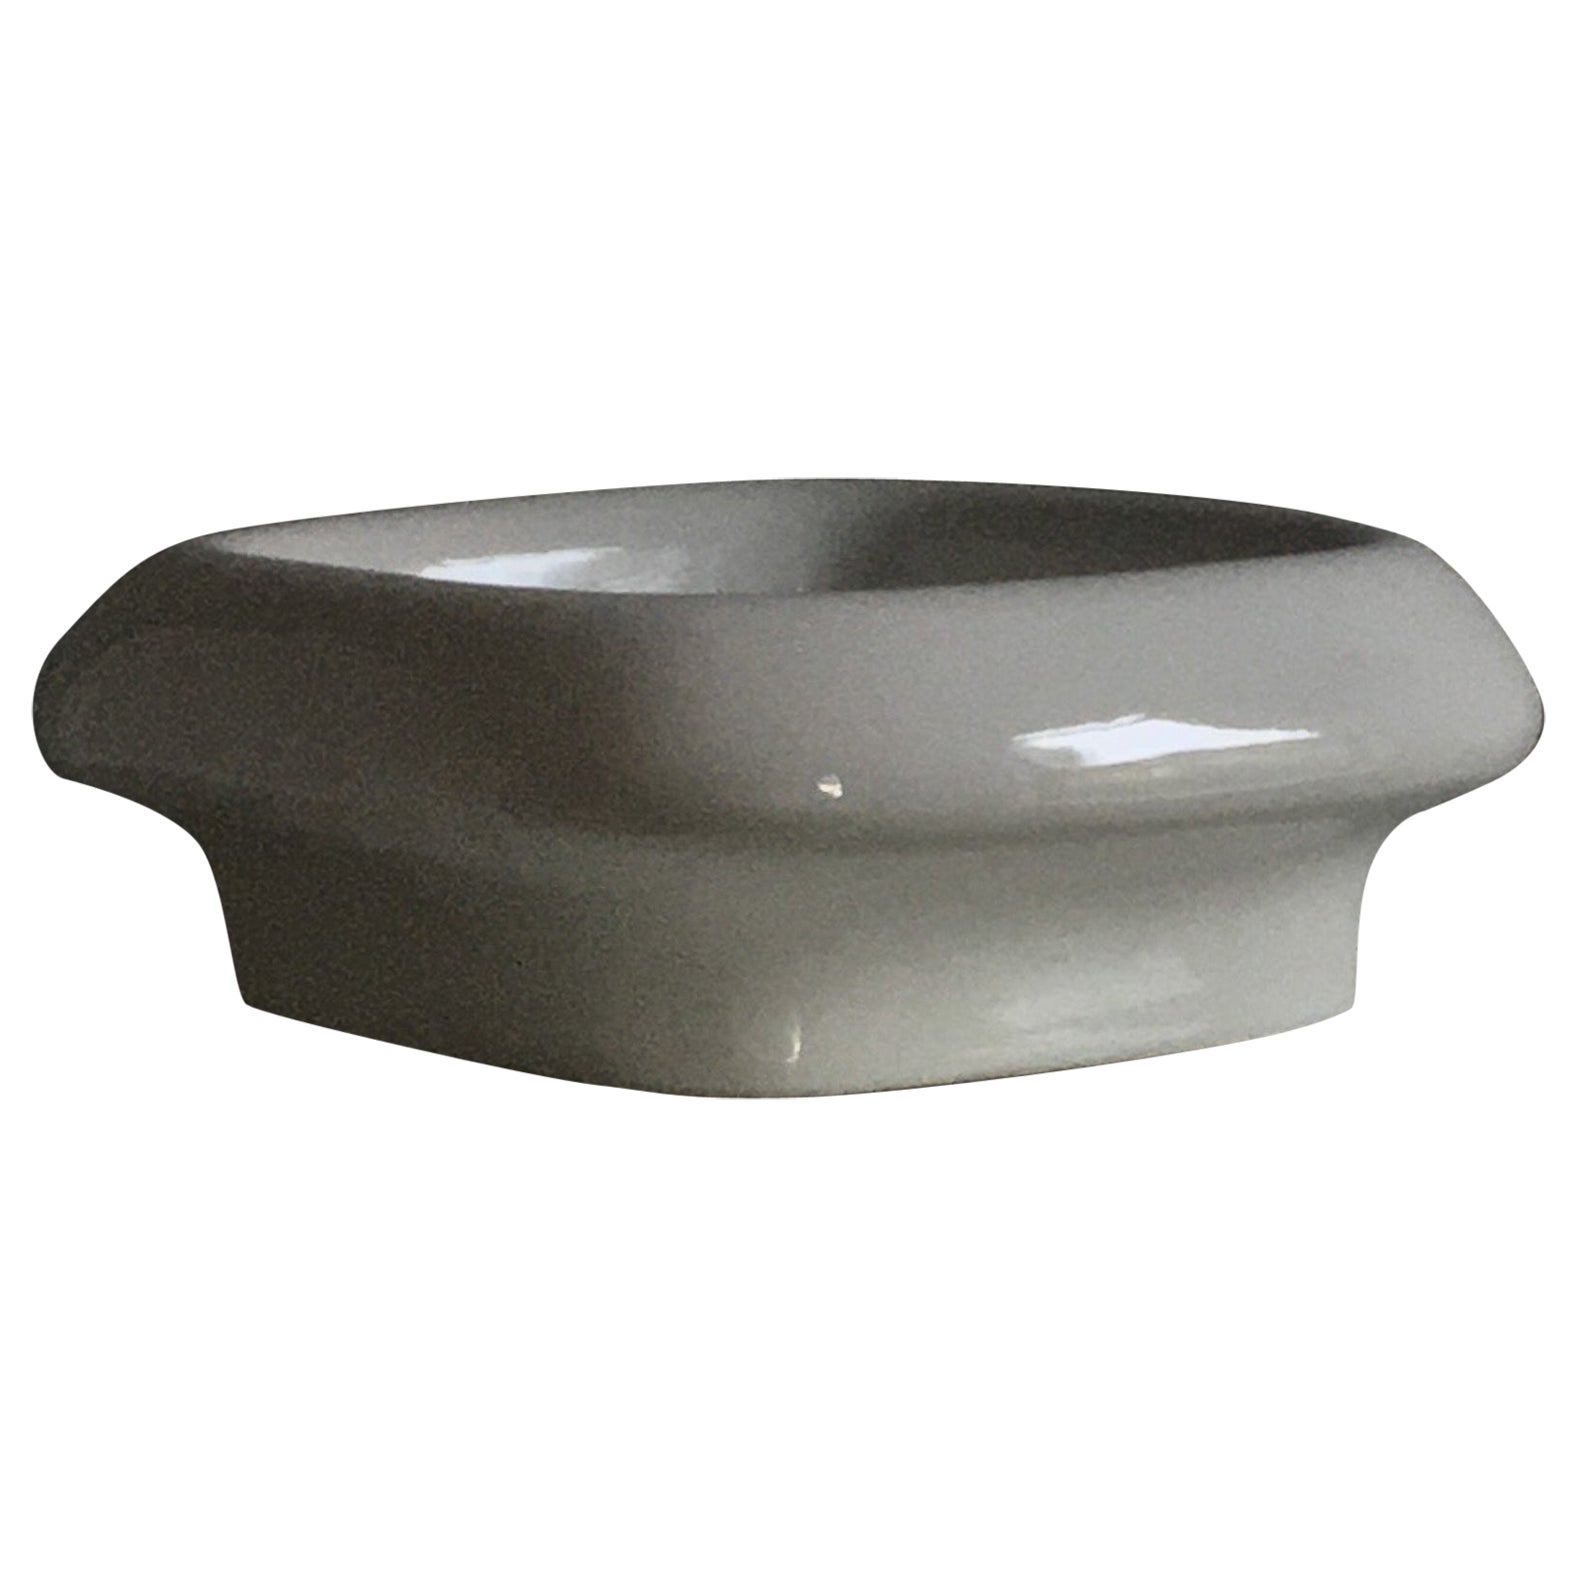 c. 1964, Tremiti Ceramic Bowl by Angelo Mangiarotti for Danese